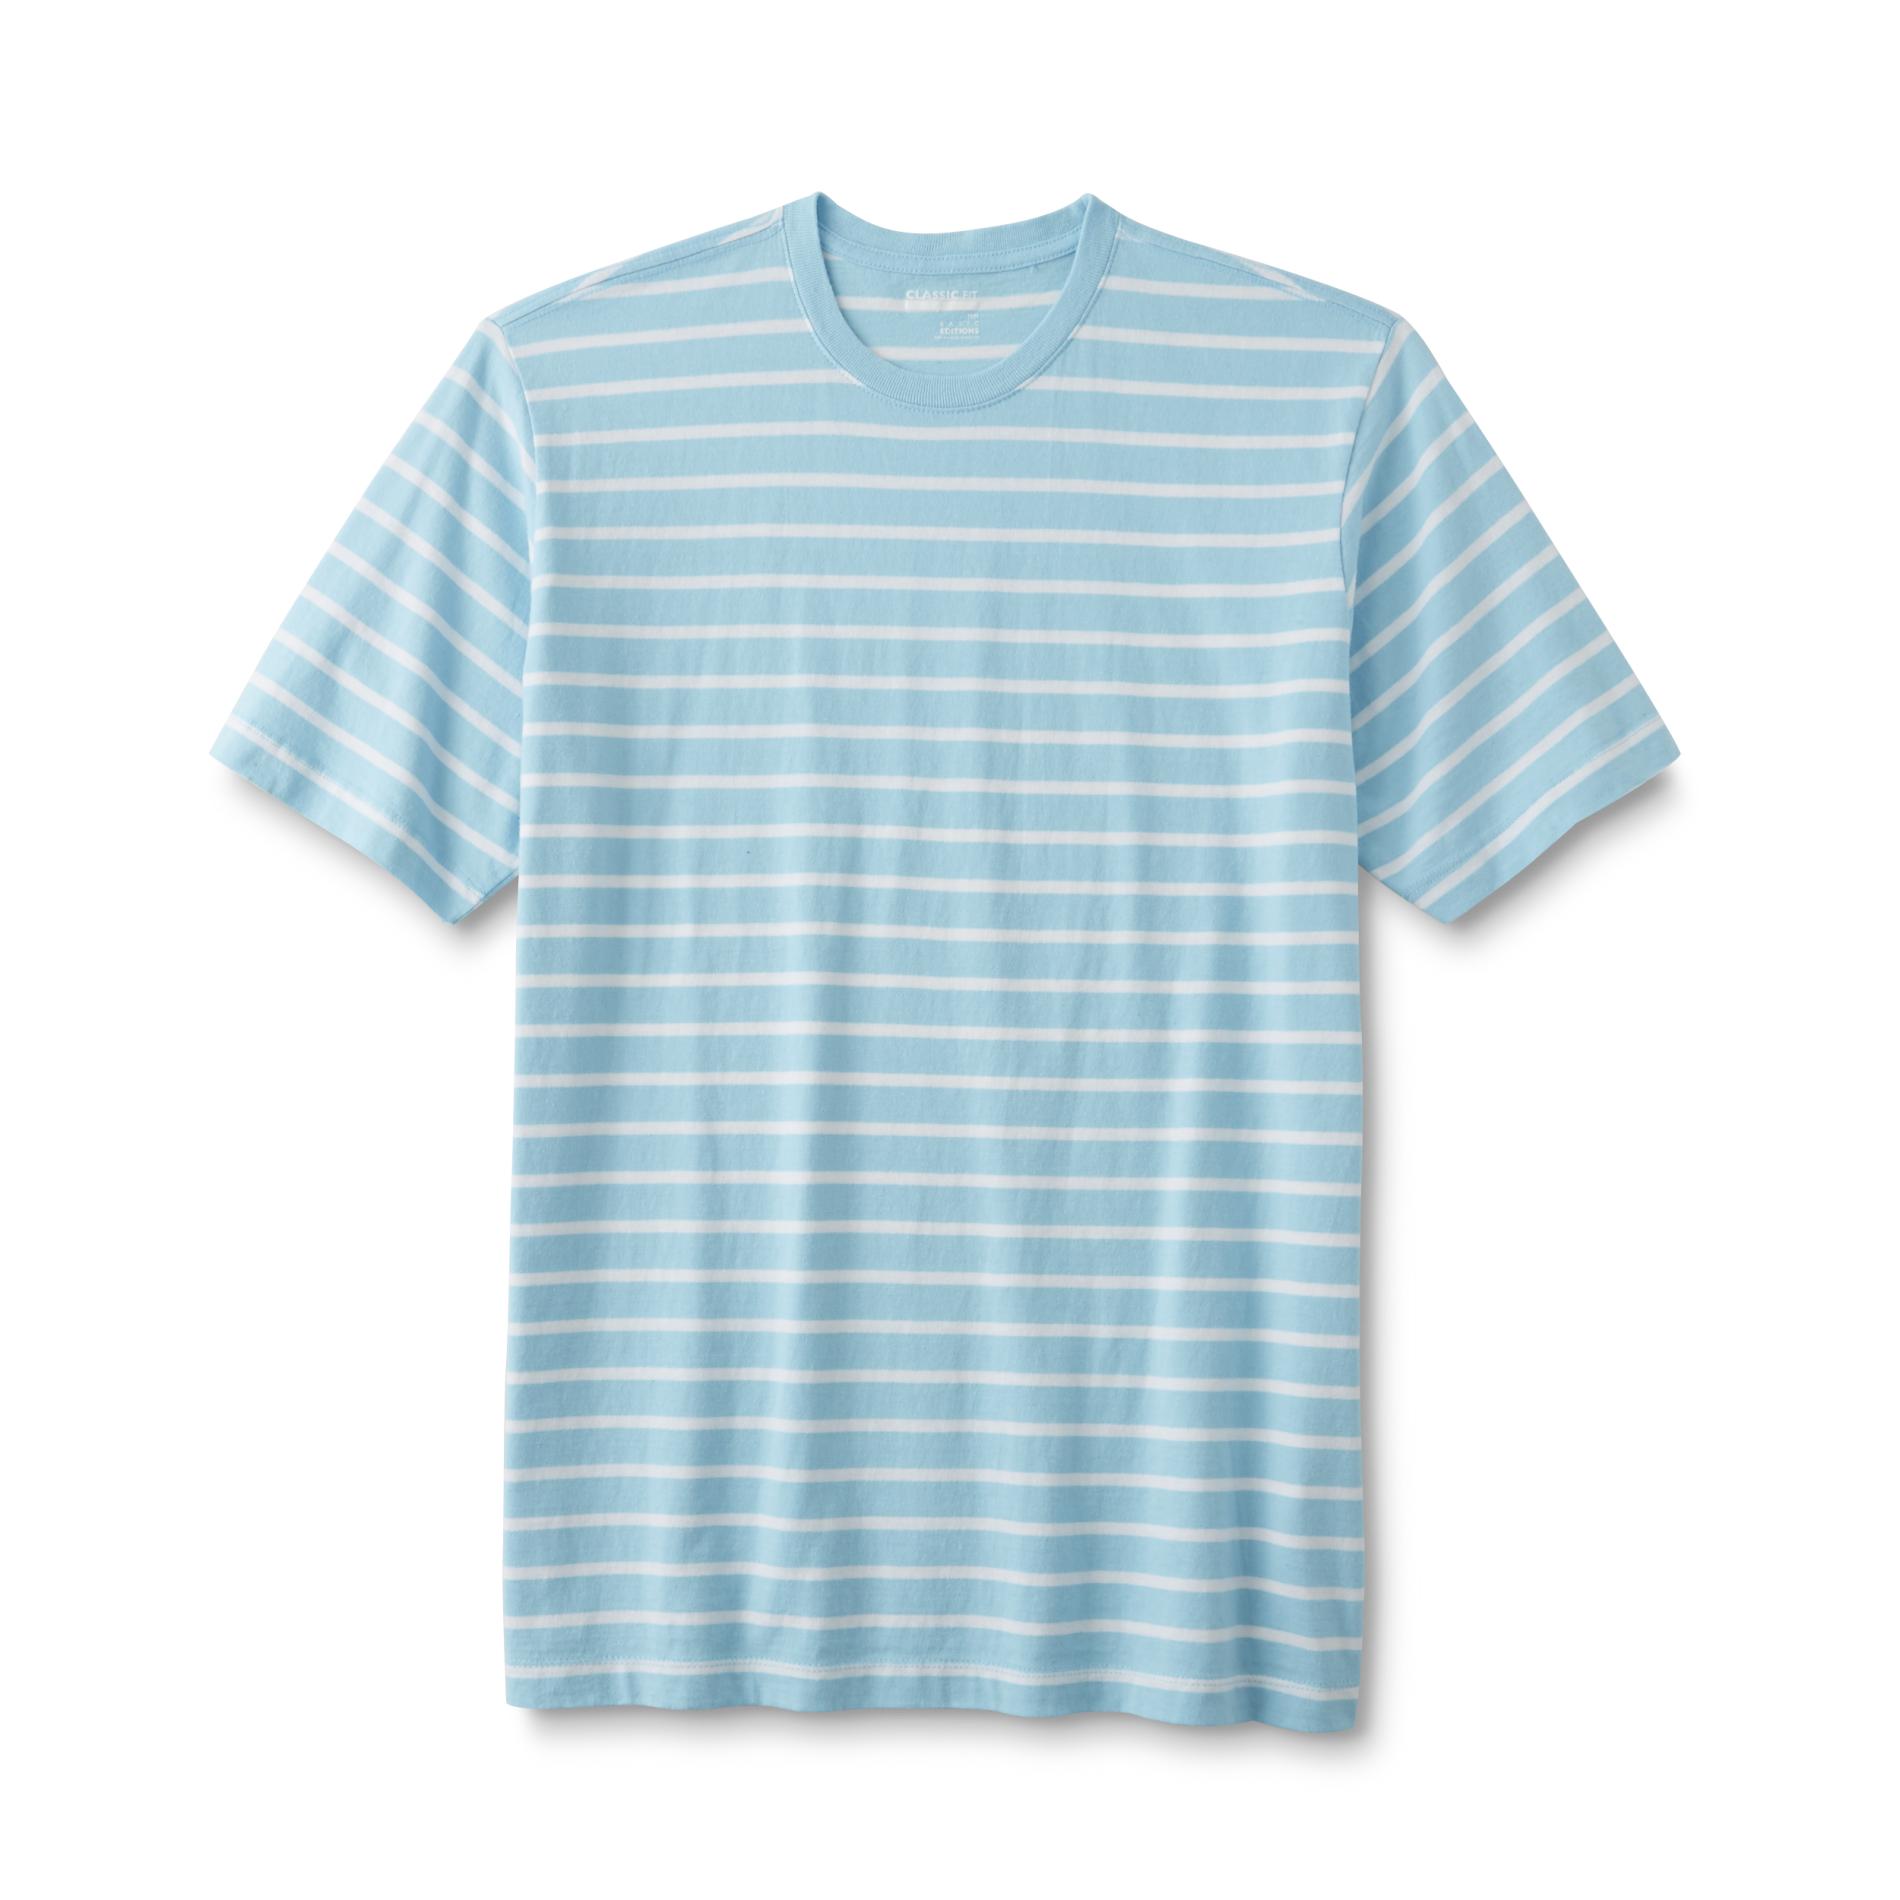 Basic Editions Men's T-Shirt - Striped